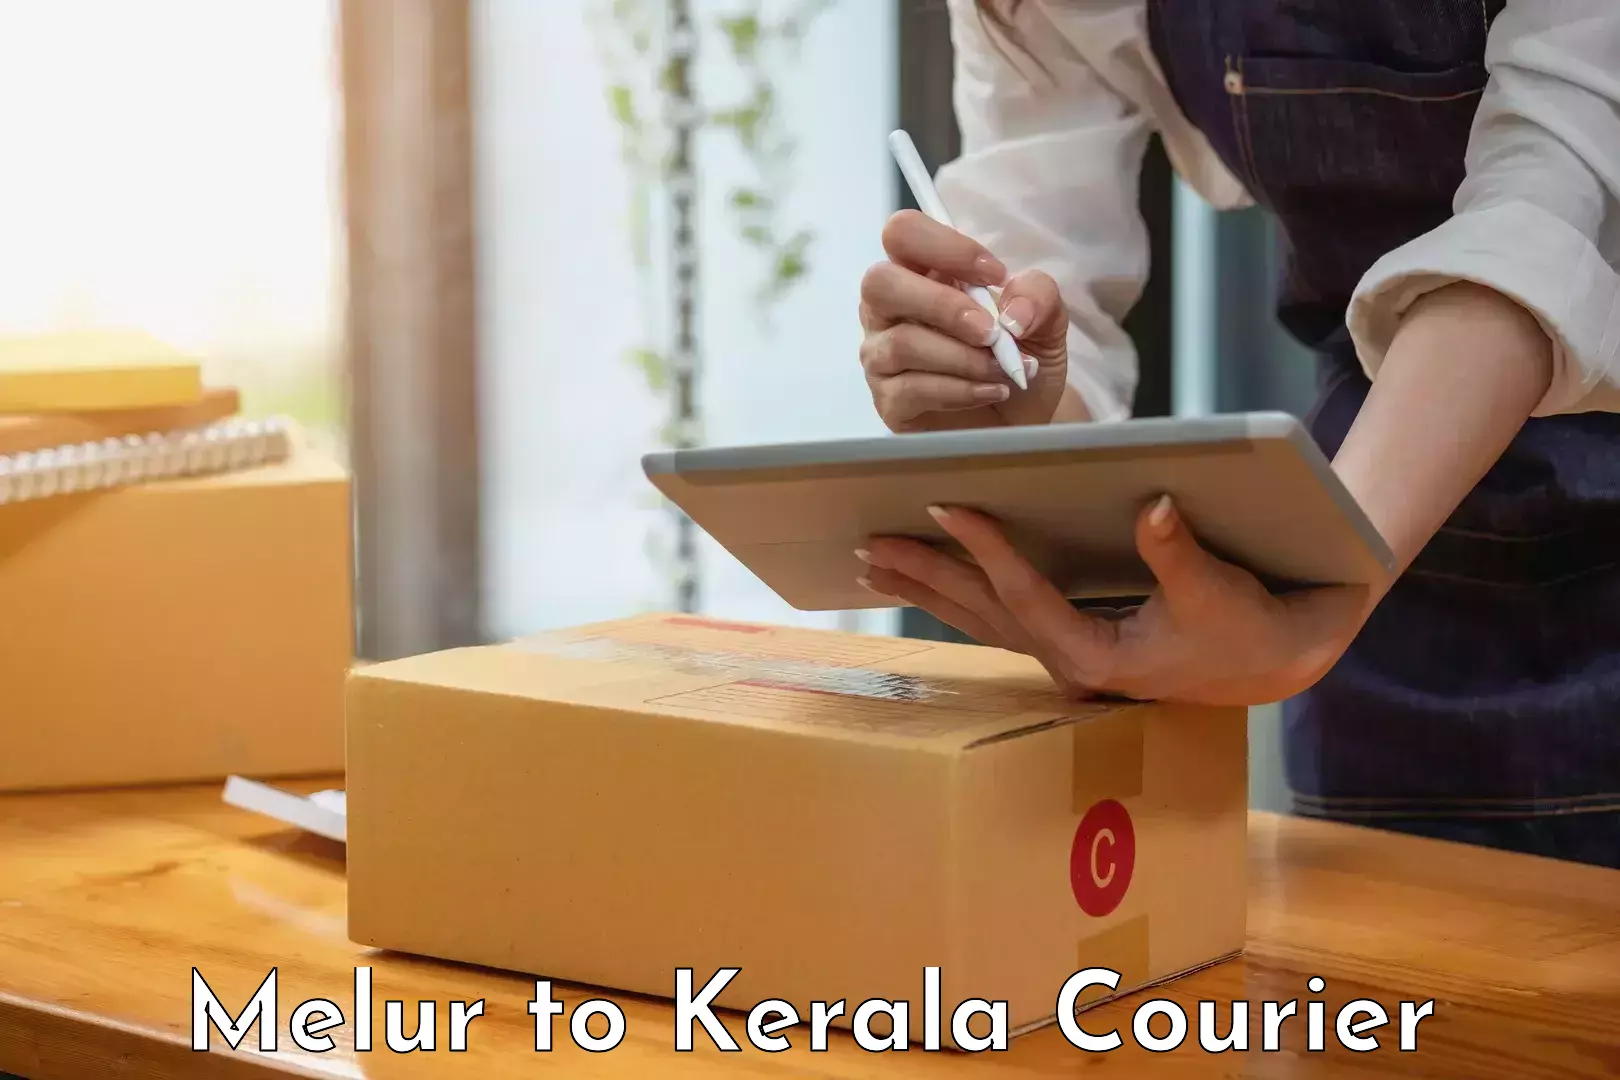 Courier service comparison Melur to Kazhakkoottam